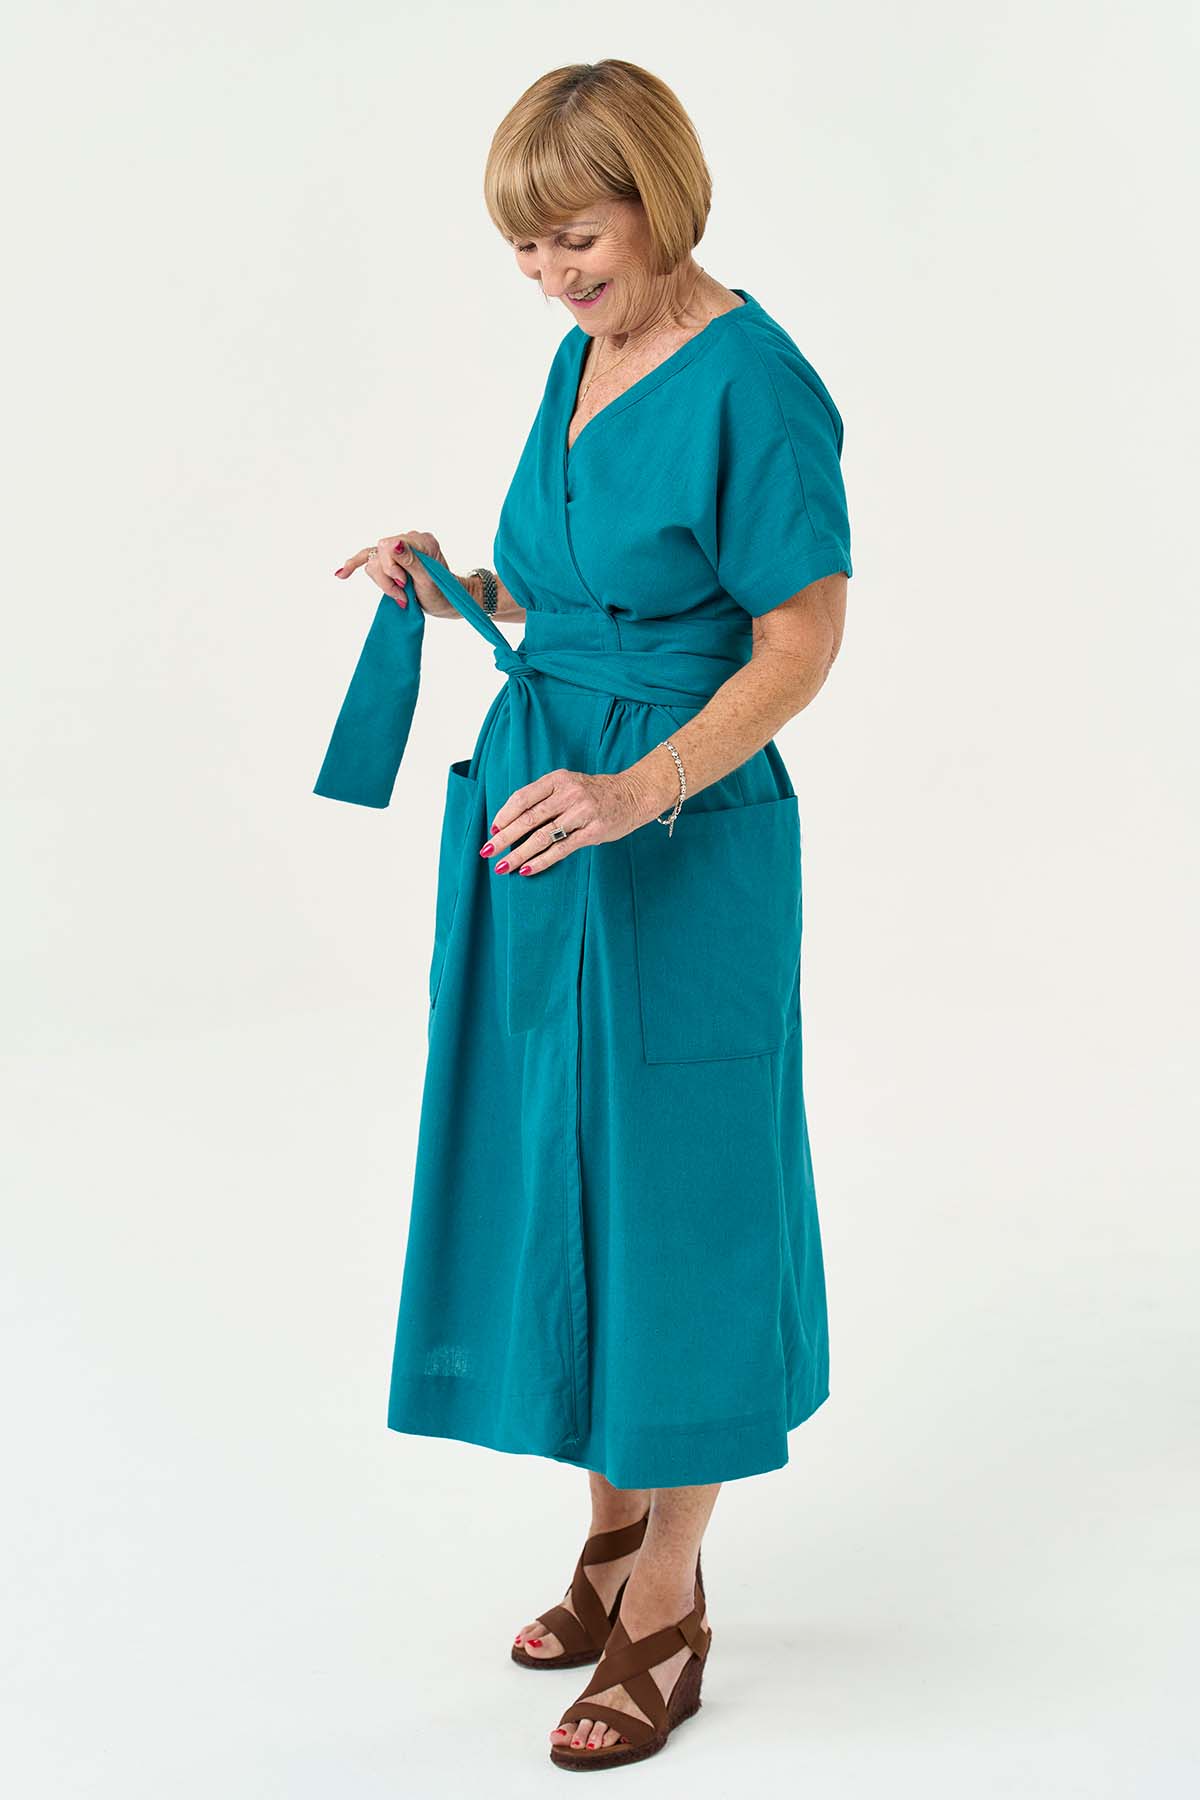 Sew Over It - Norah Dress